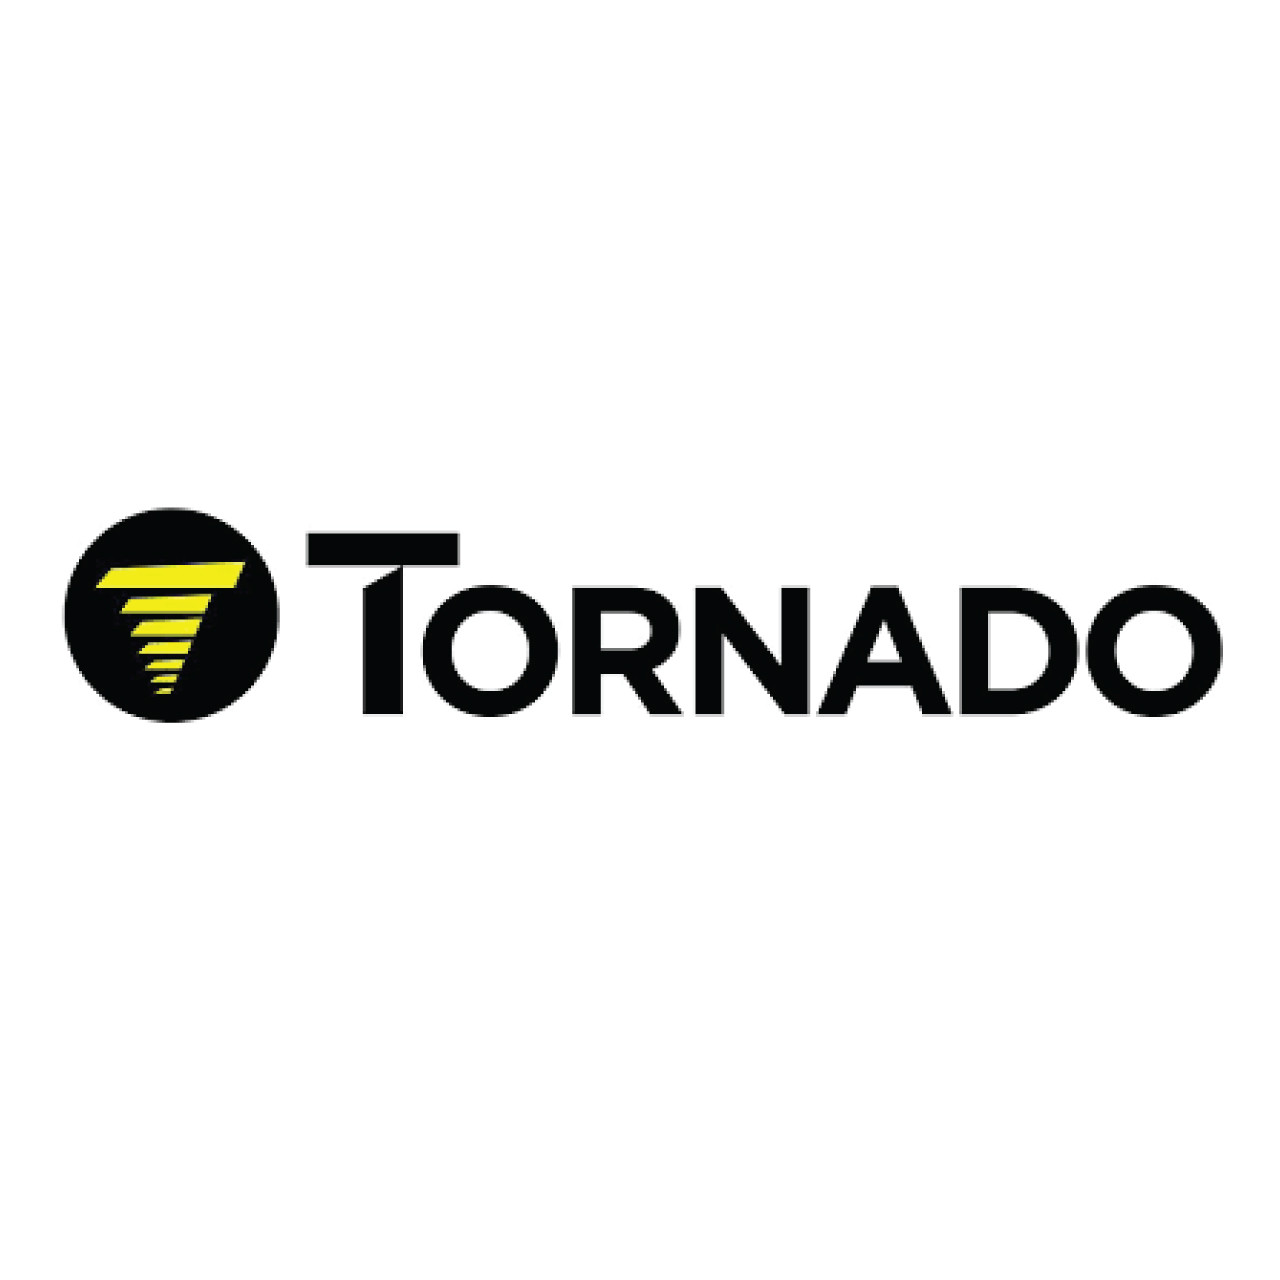 00-1200-0503, Tornado 00-1200-0503, Tornado WASHER, M12 FLAT S/S CIMEX, Tornado parts